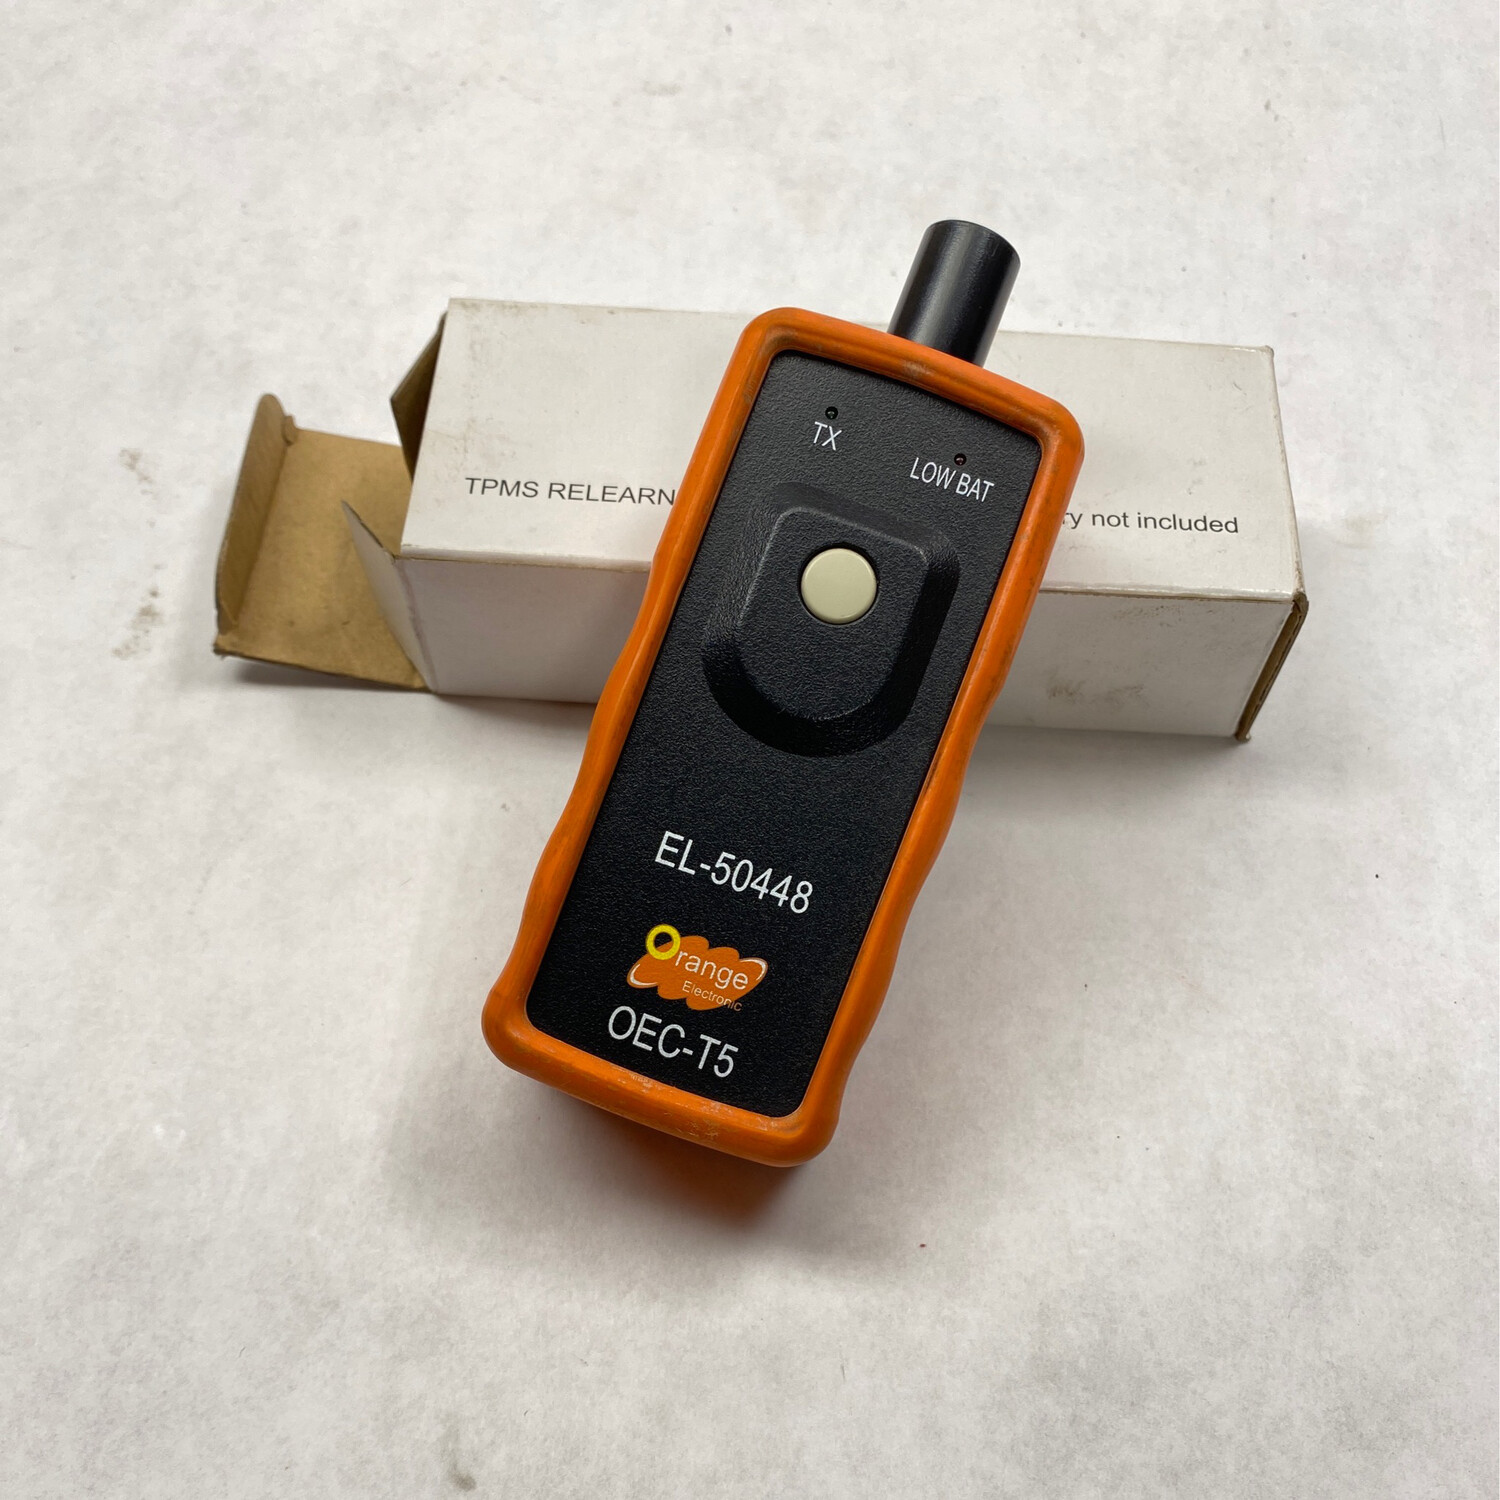 Orange TPMS Relearn Tool For GM, EL-50448